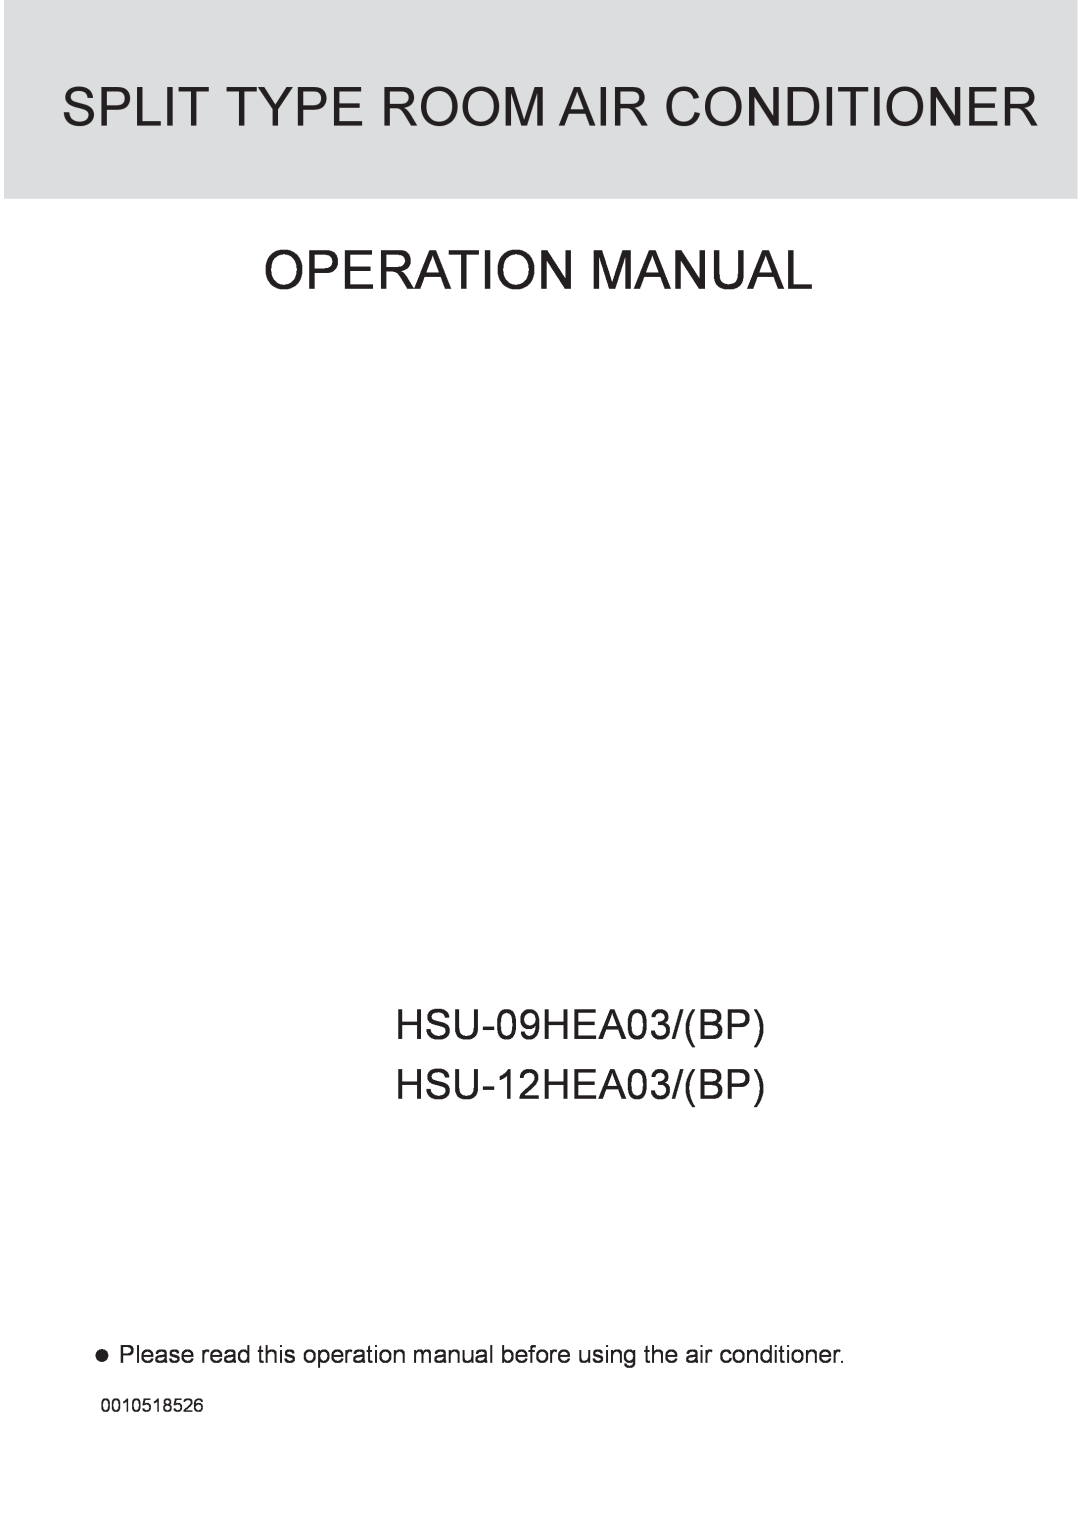 Haier HSU-12HEA03/(BP), HSU-09HEA03/(BP) operation manual HSU-09HEA03/BP HSU-12HEA03/BP, Split Type Room Air Conditioner 